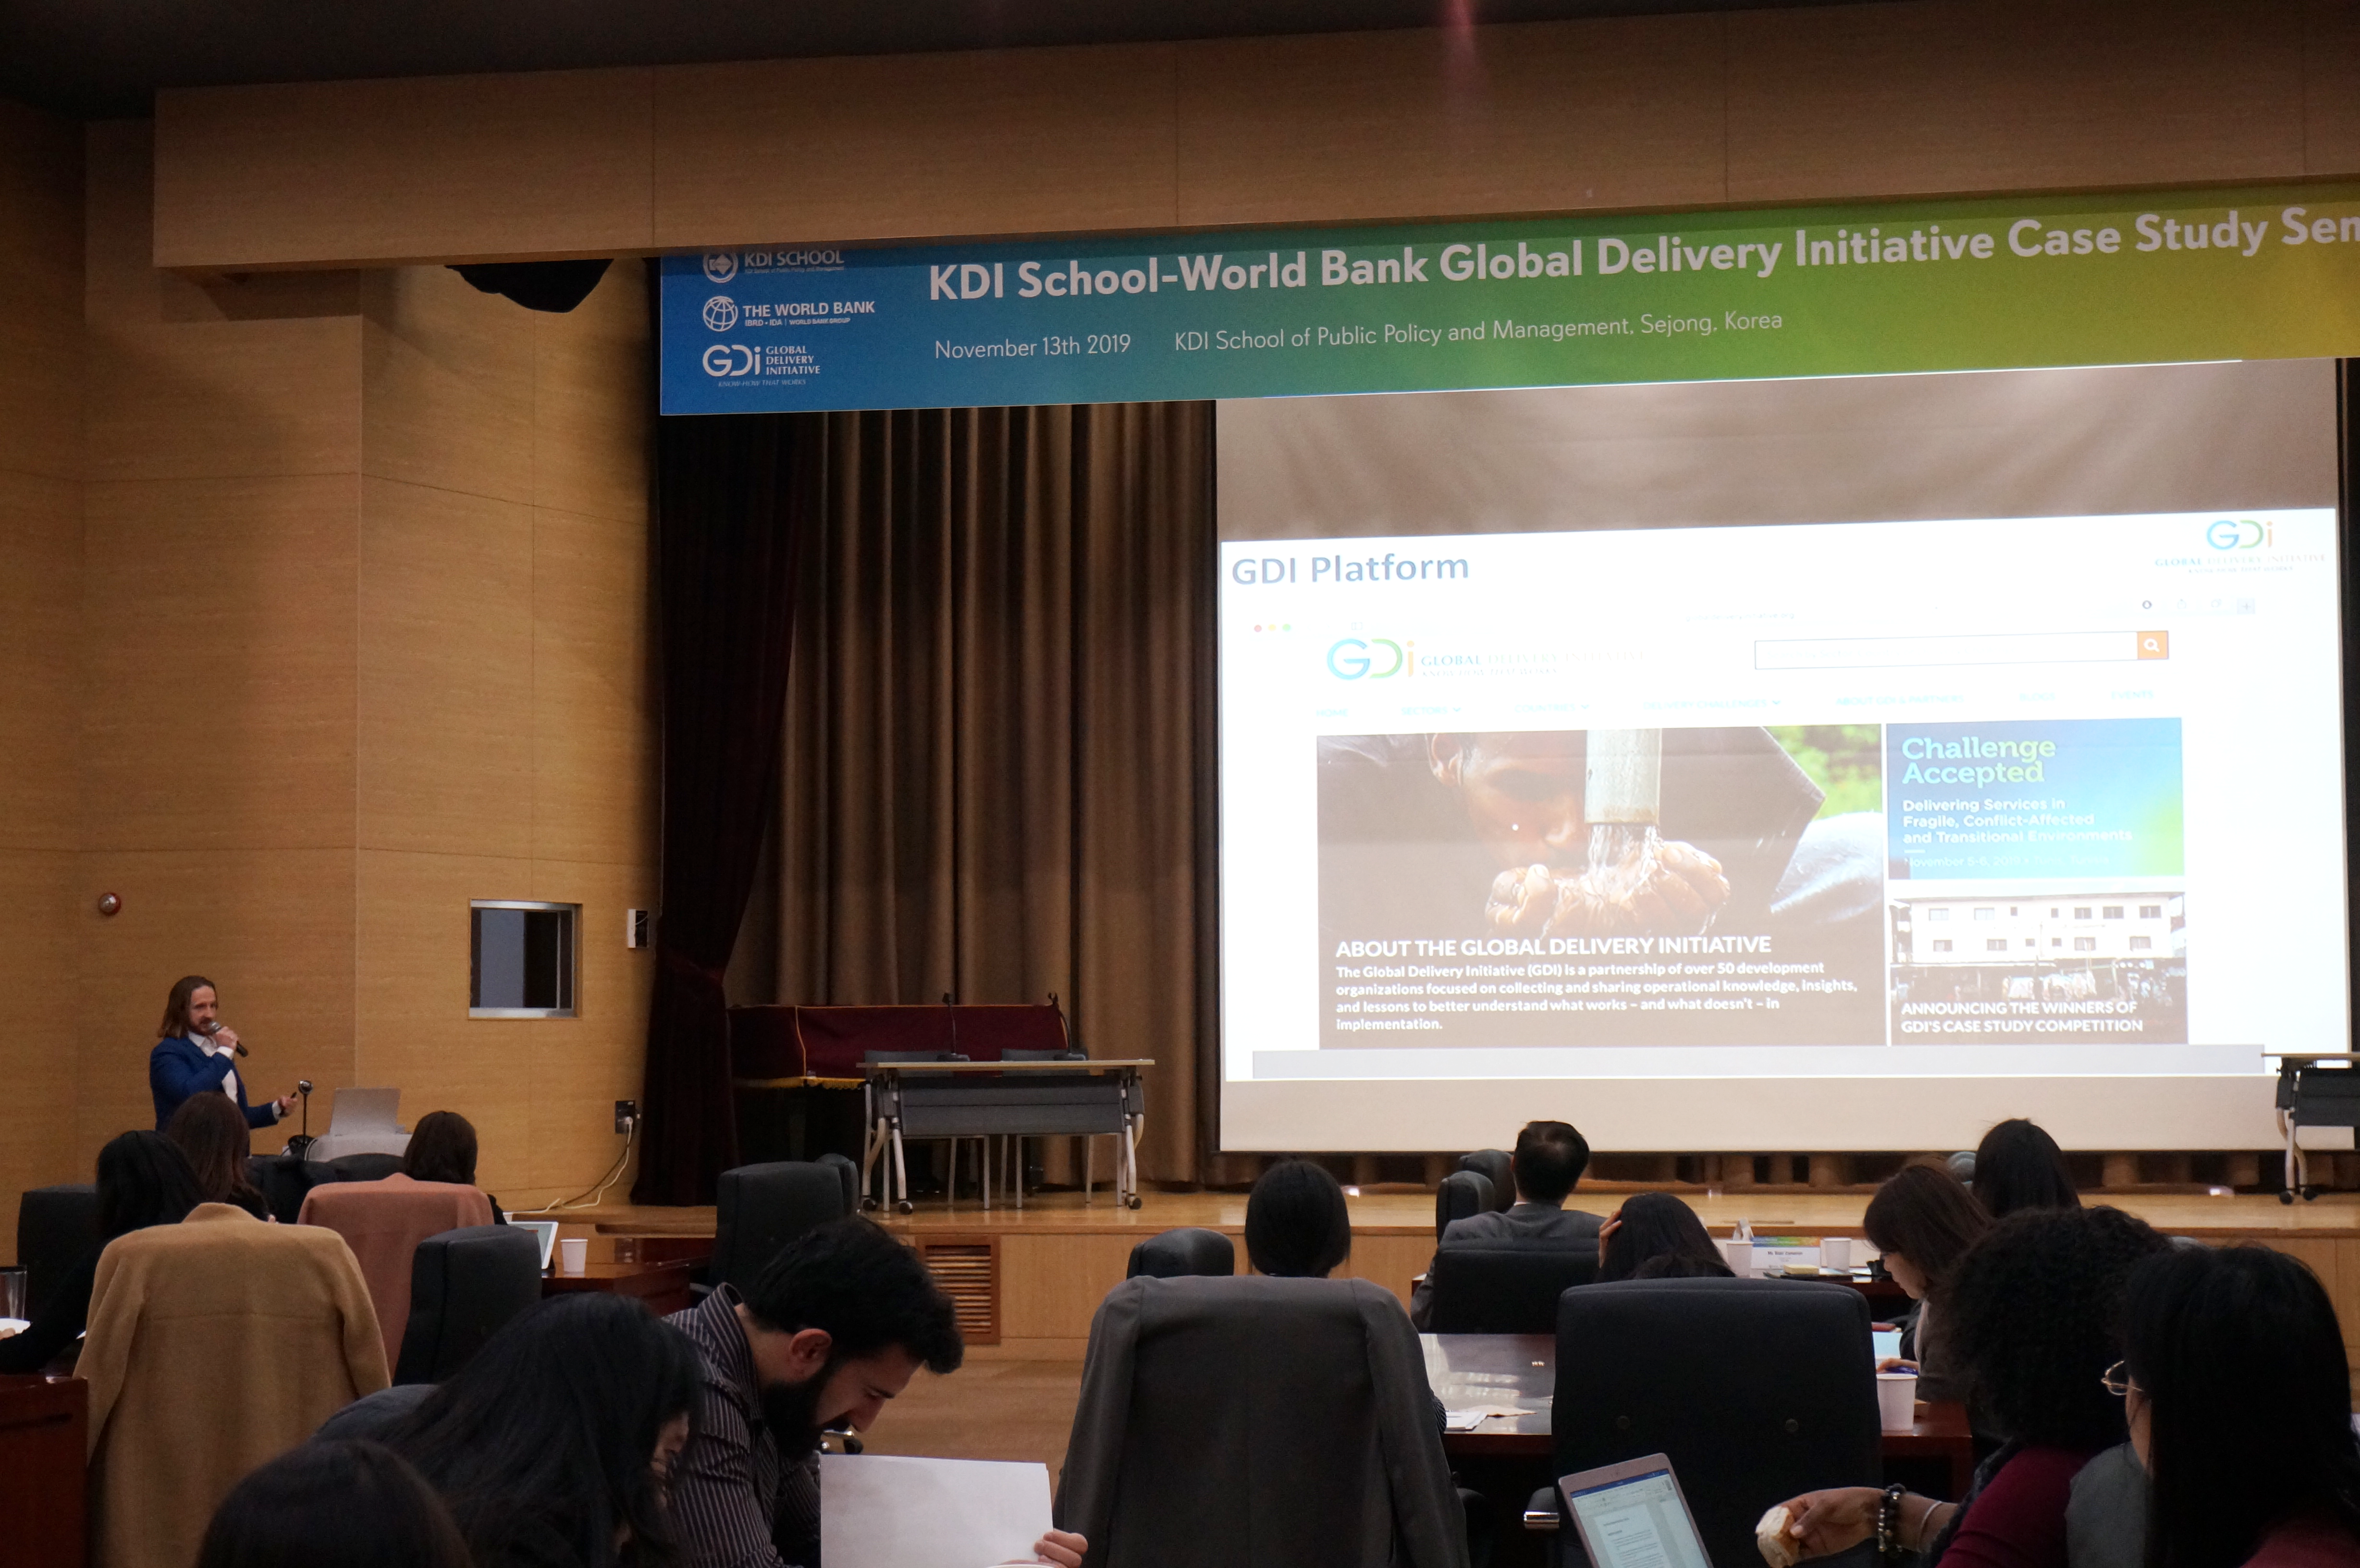 KDI School-World Bank Global Delivery Initiative Case Study Seminar